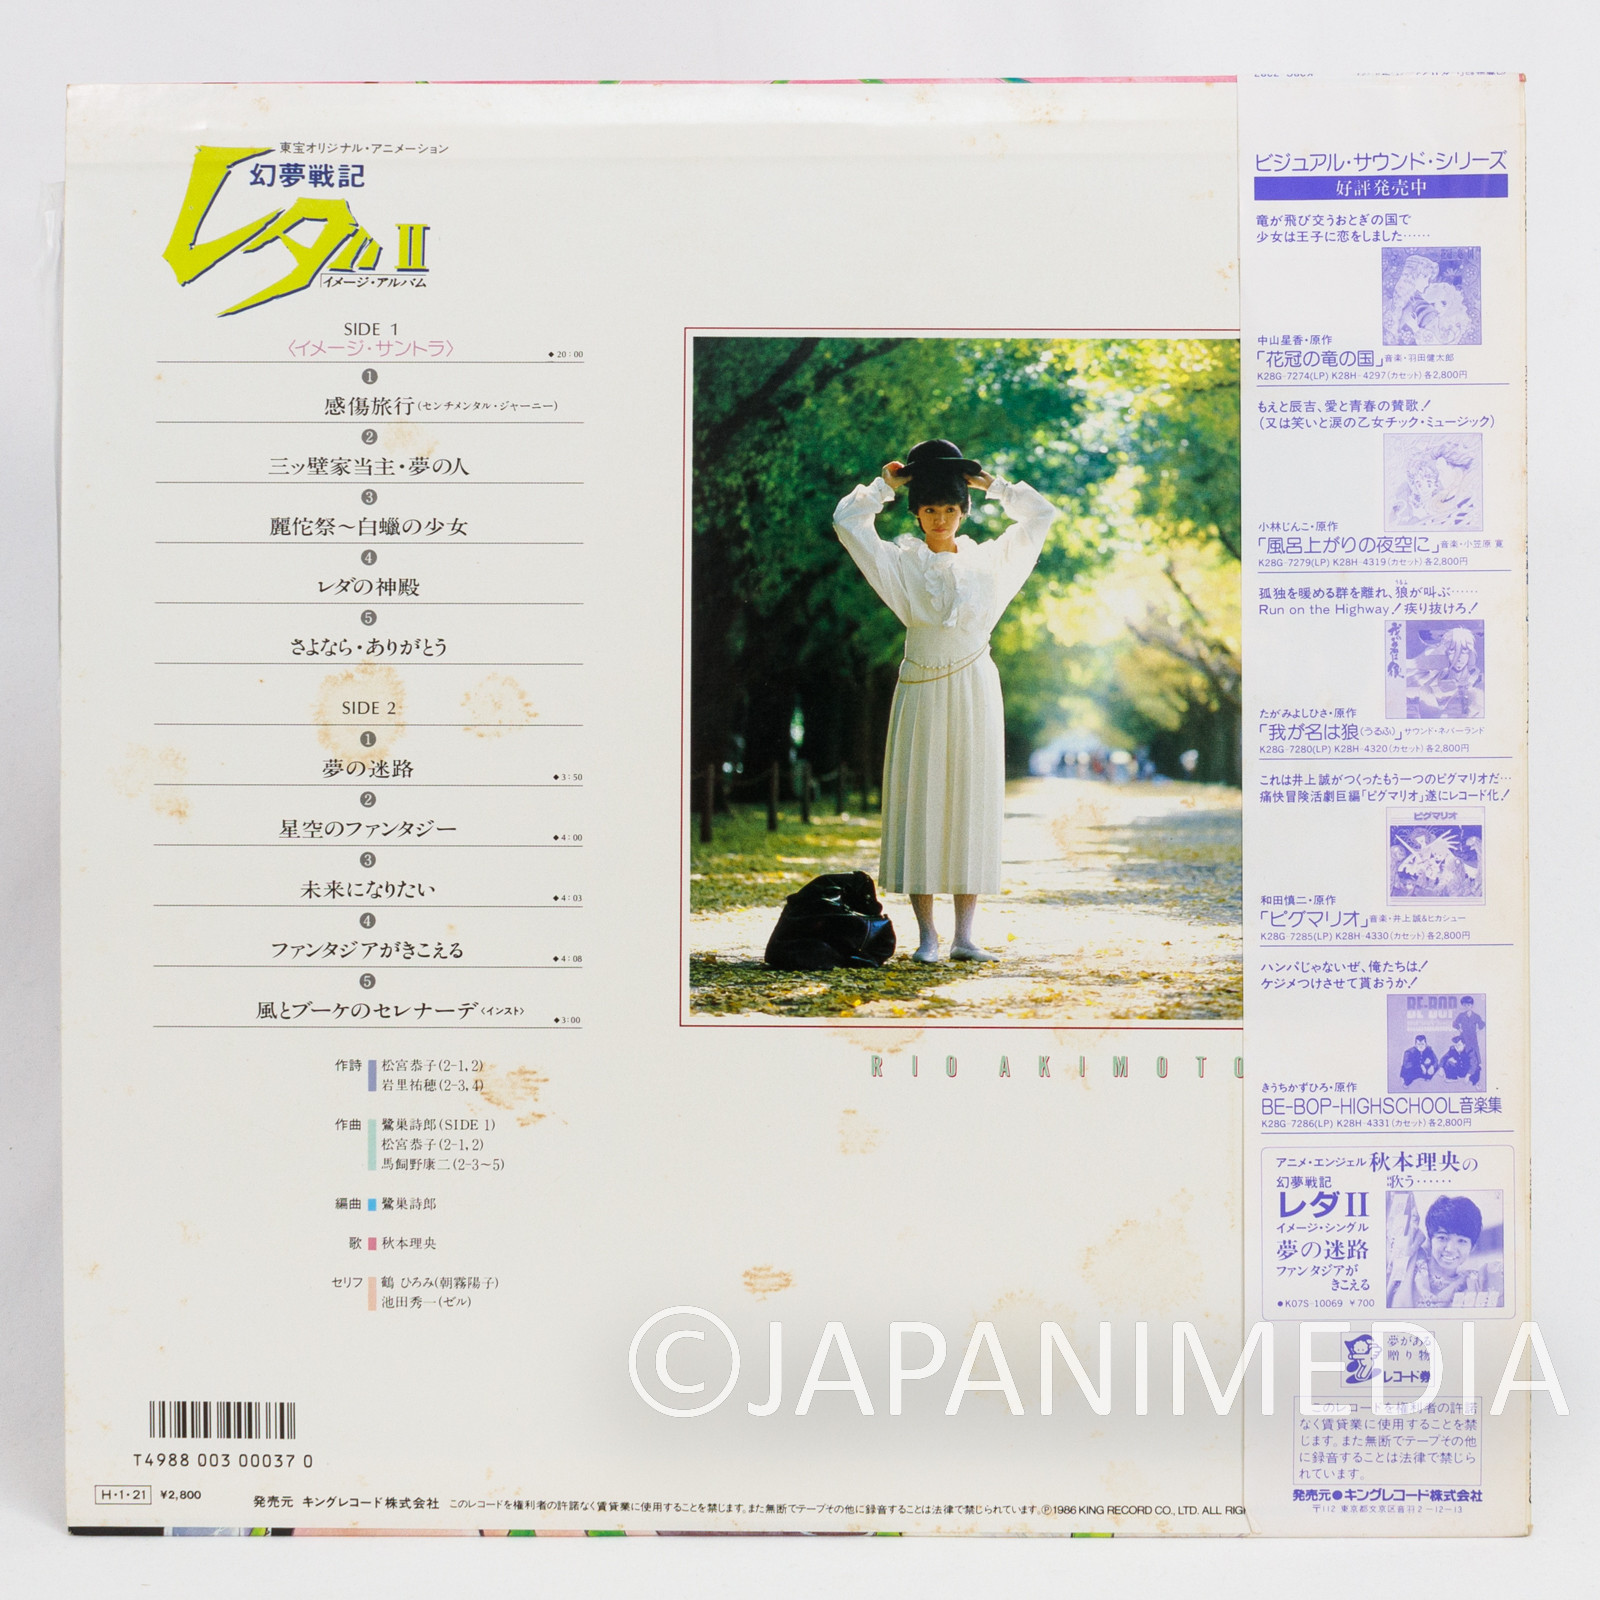 Leda: The Fantastic Adventure of Yohko II Drama&Music LP Vinyl Record K25G-7287 /Shiro Sagisu